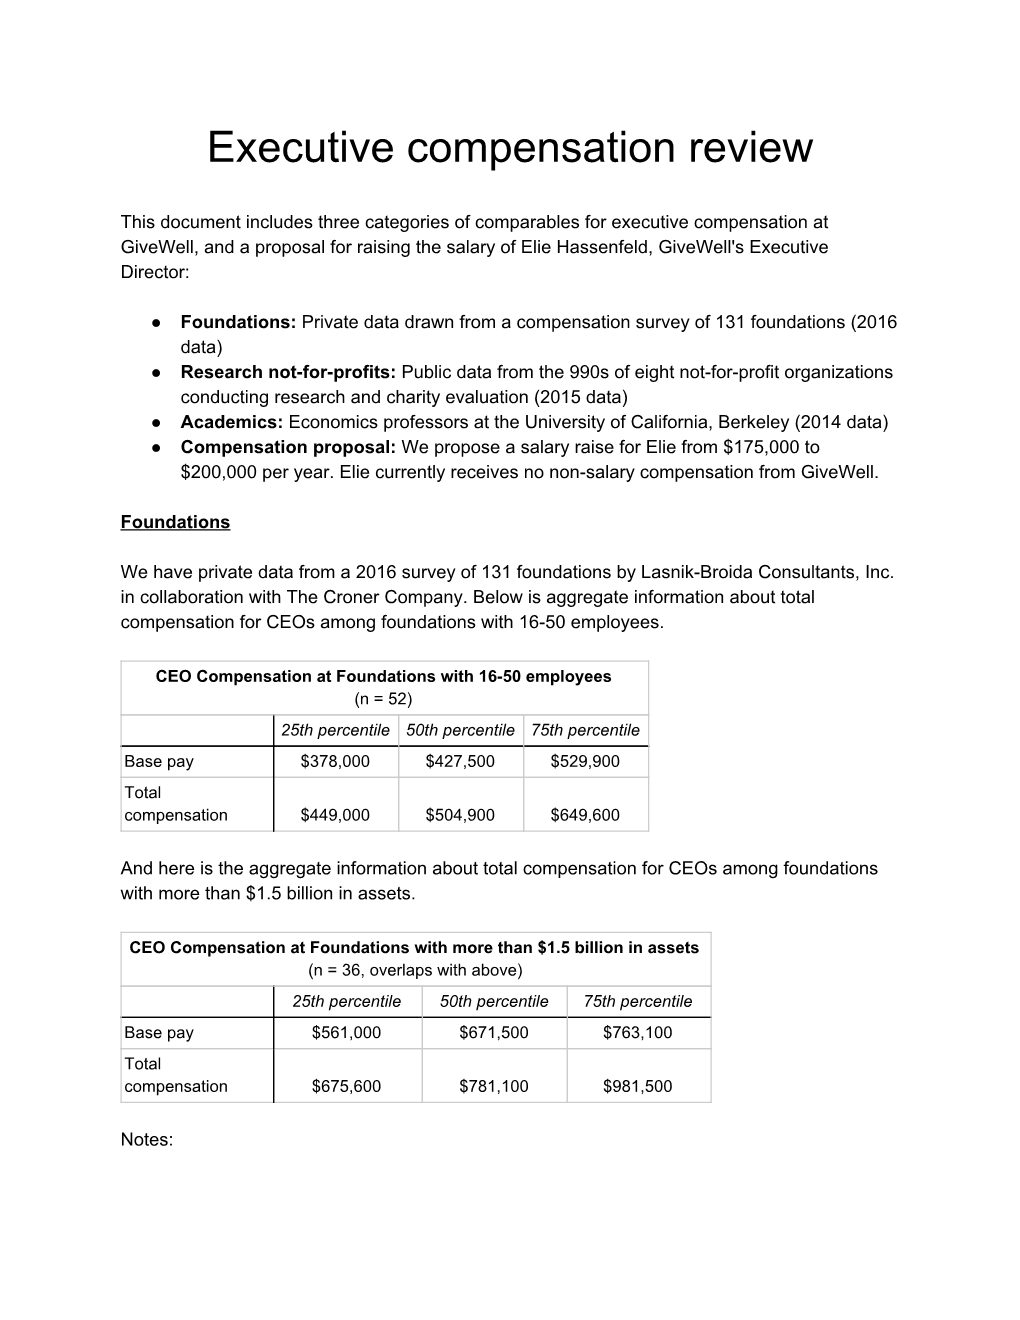 Executive Compensation Review